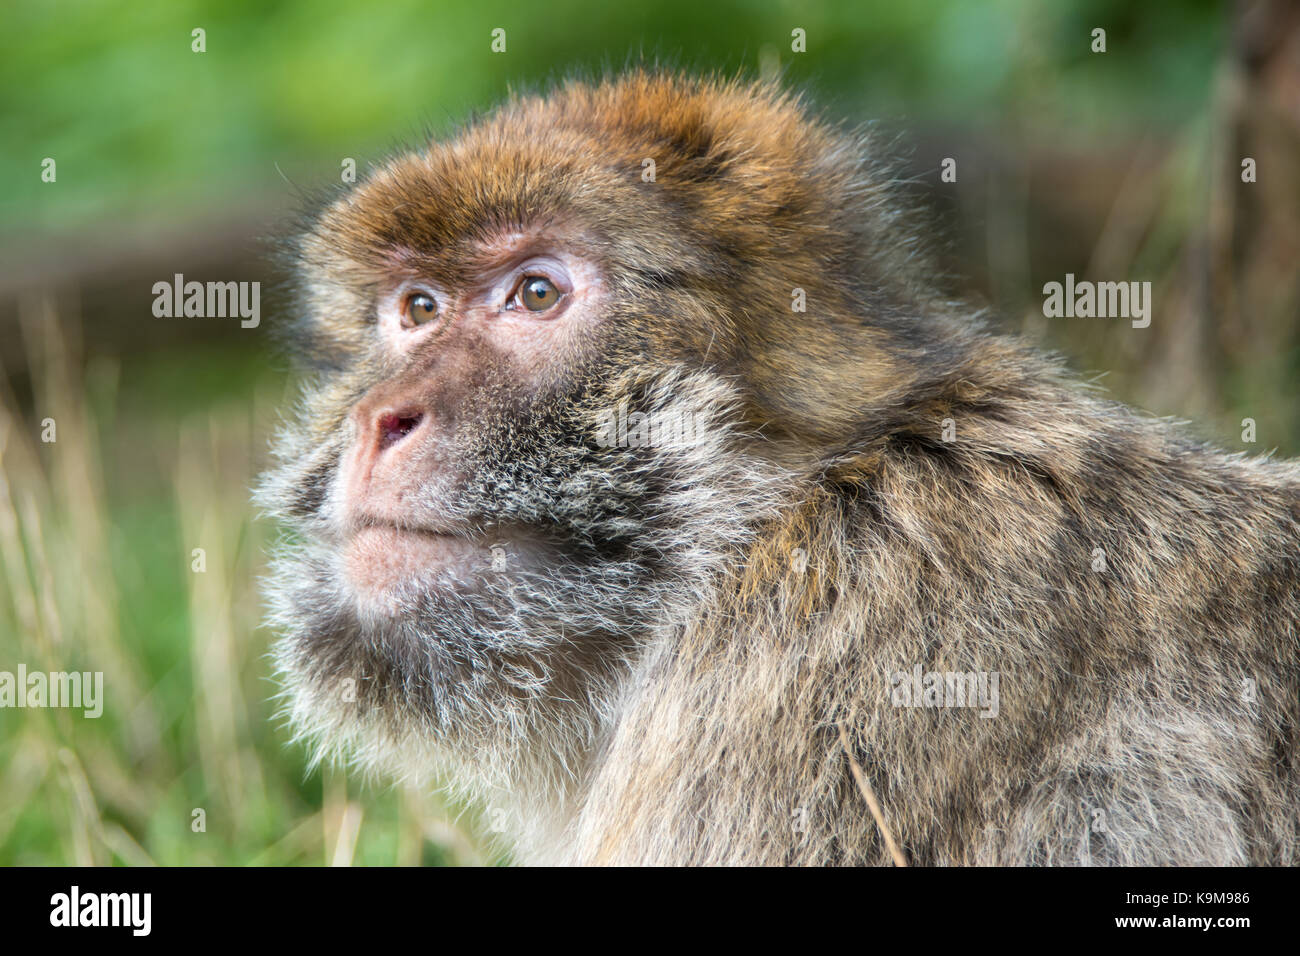 Monkey portrait Stock Photo